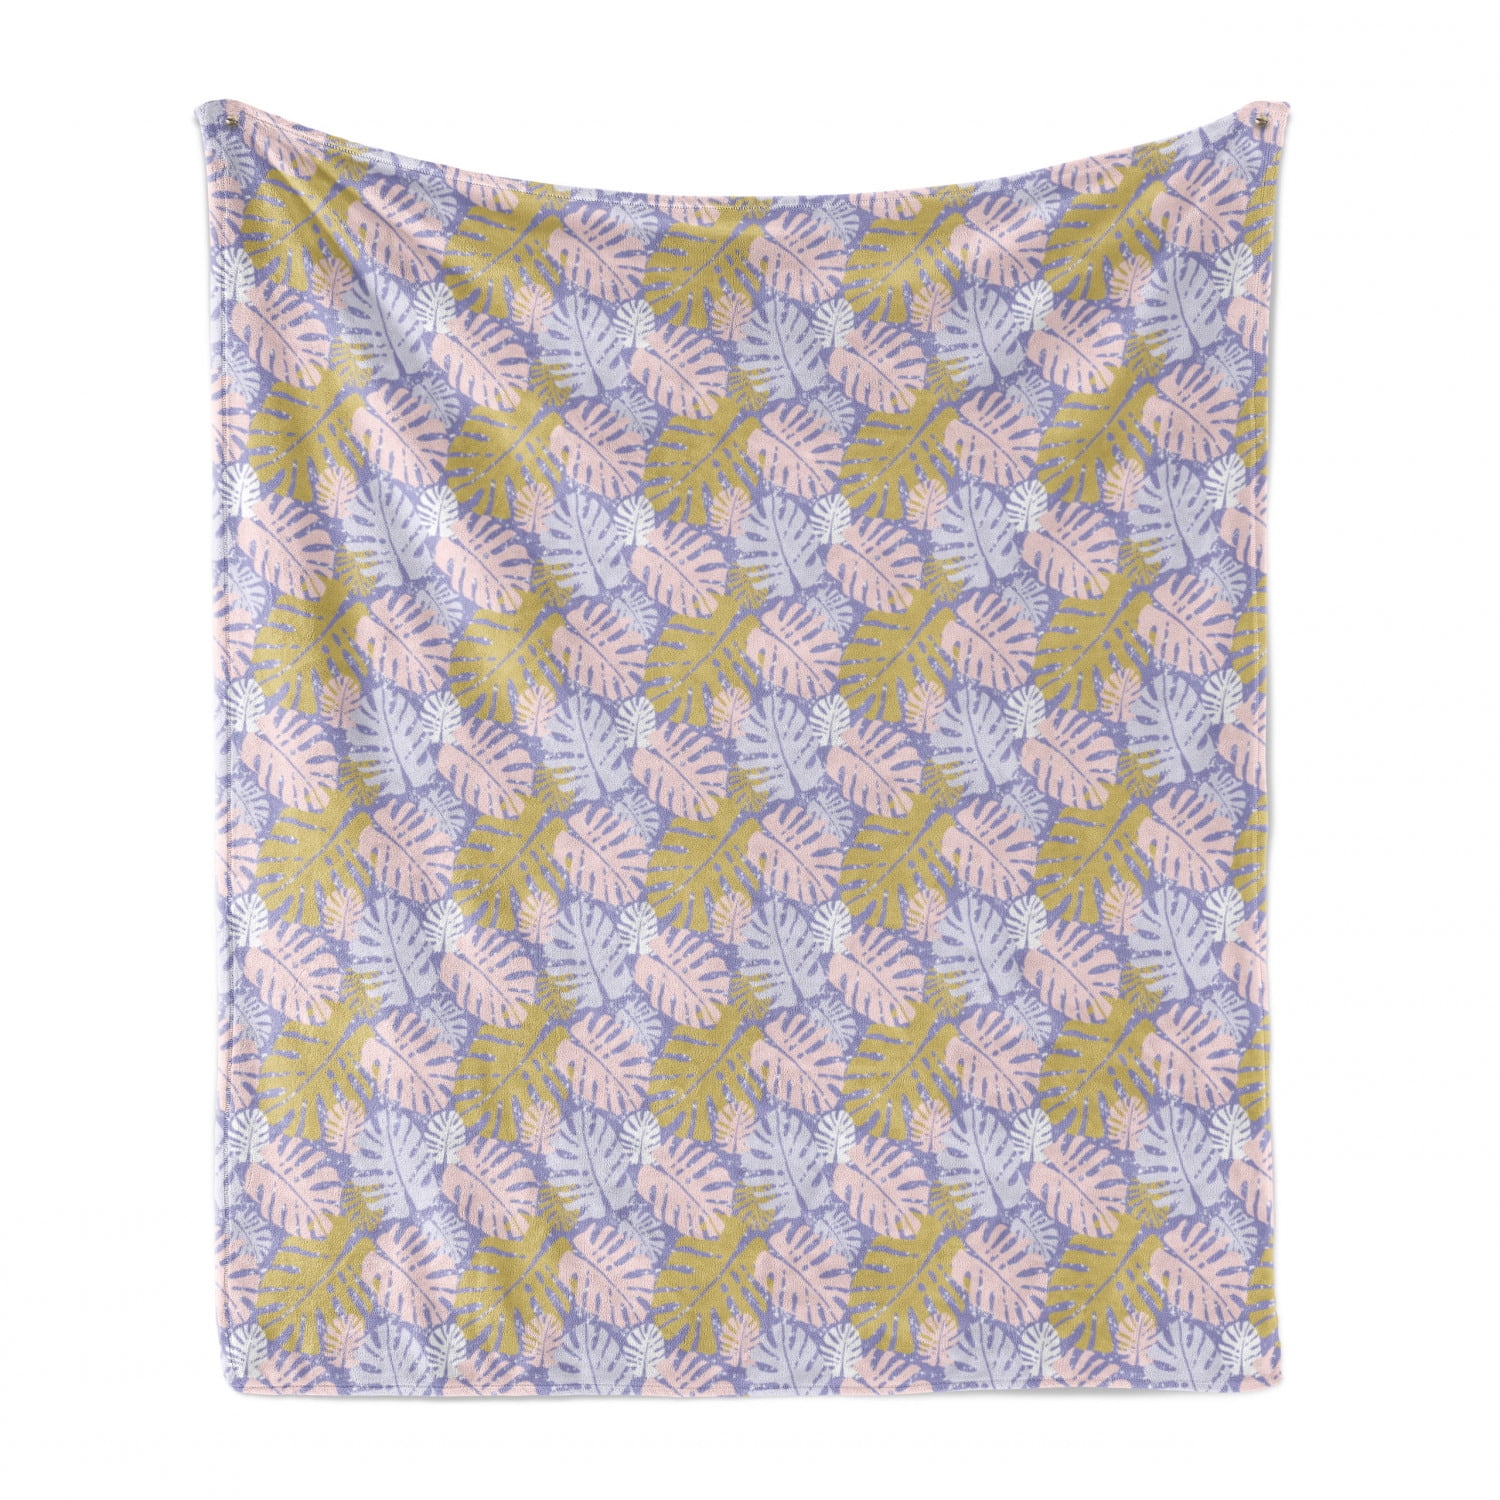 NEW LEMONS Throw Blanket Oversize Super Soft 60x72 GIFT Spring Holiday Summer 